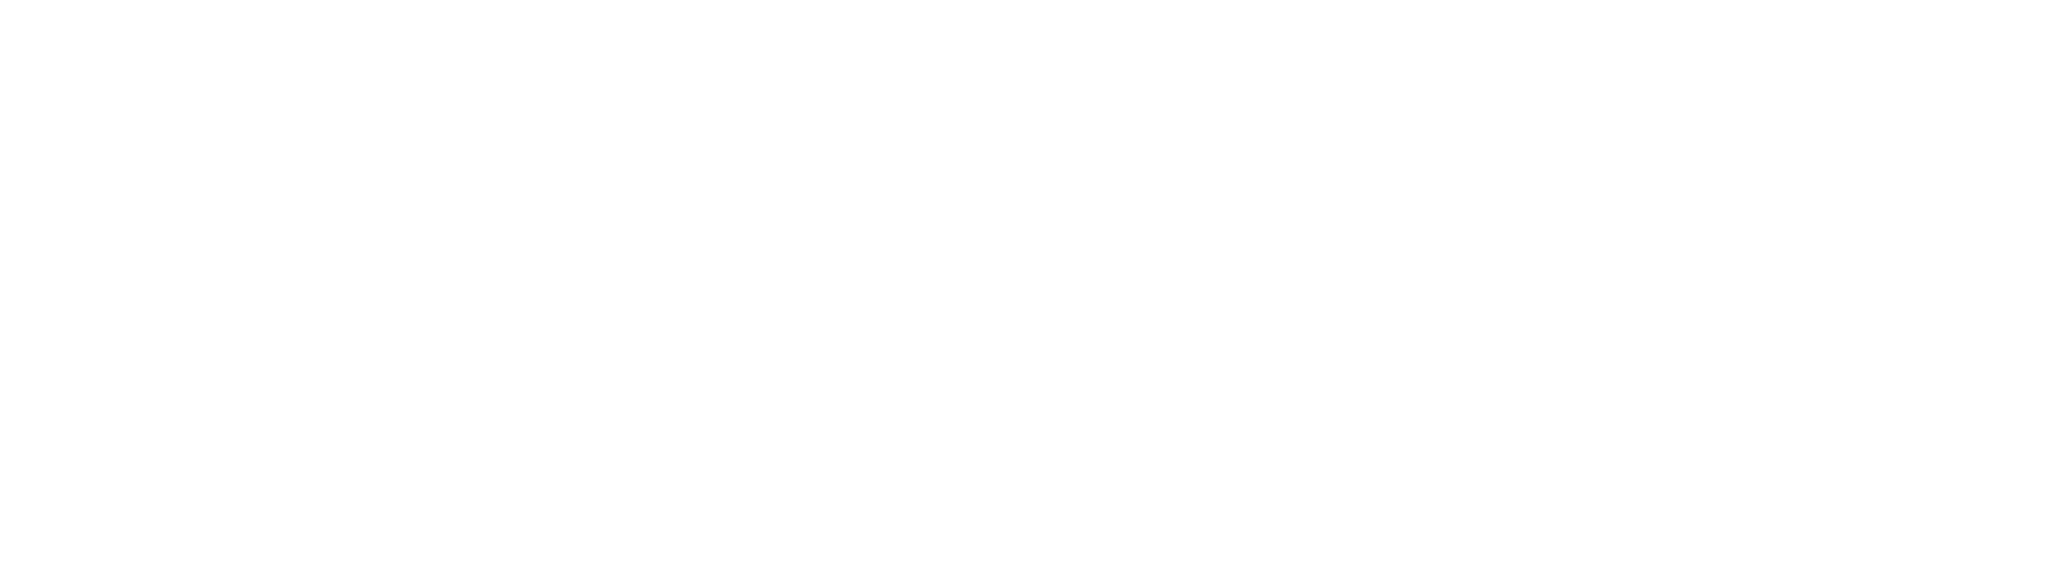 S1 AsiaPac